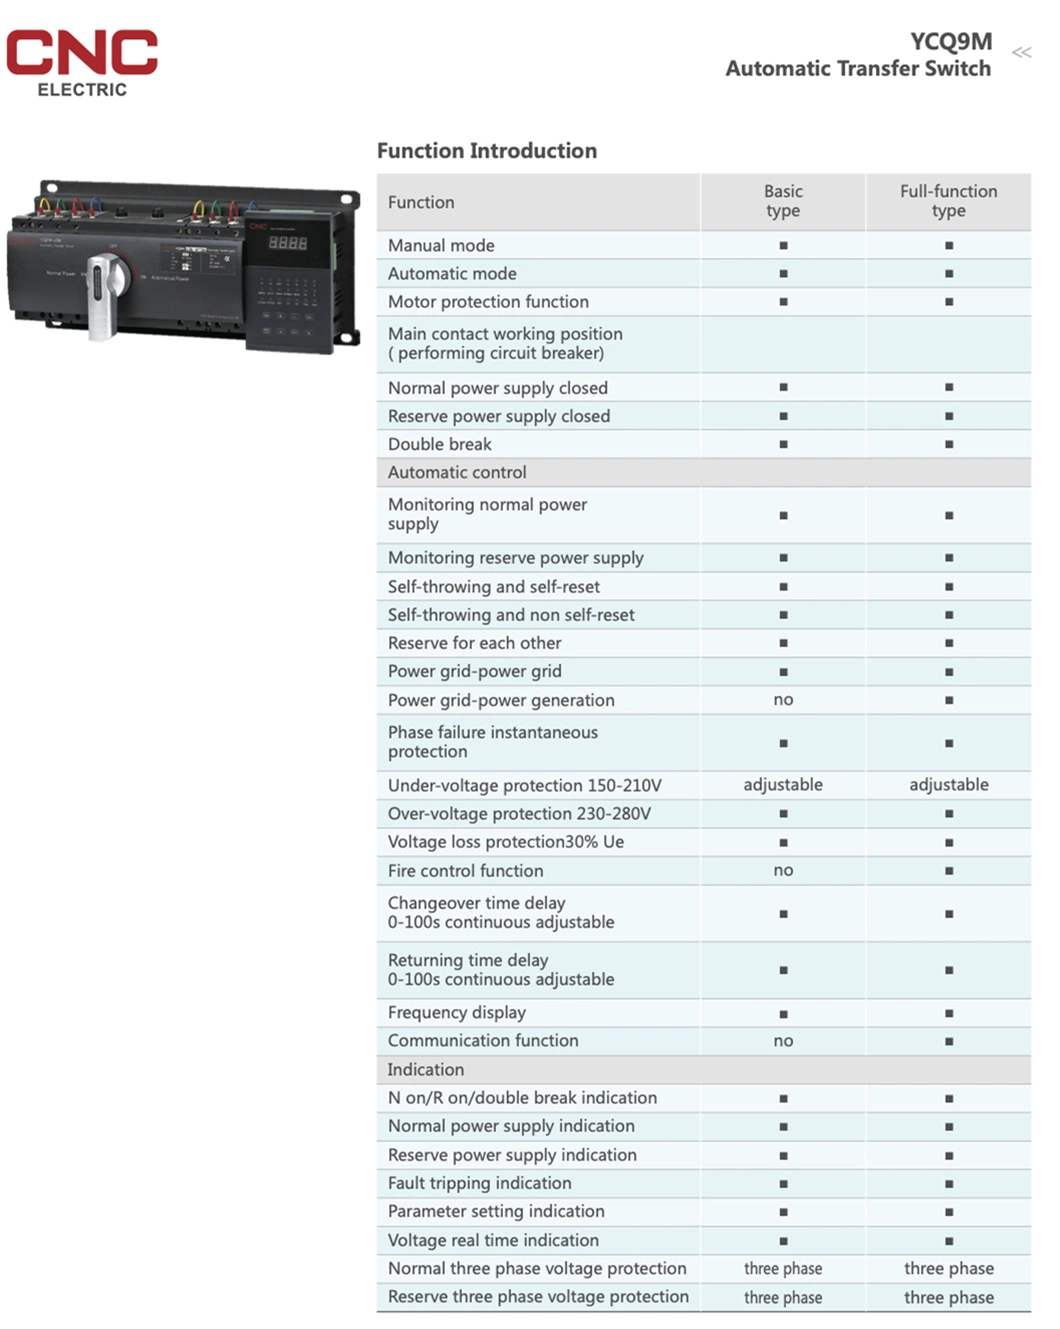 CNC Intelligent ATS Generator Automatic Transfer Switch Electric Manual